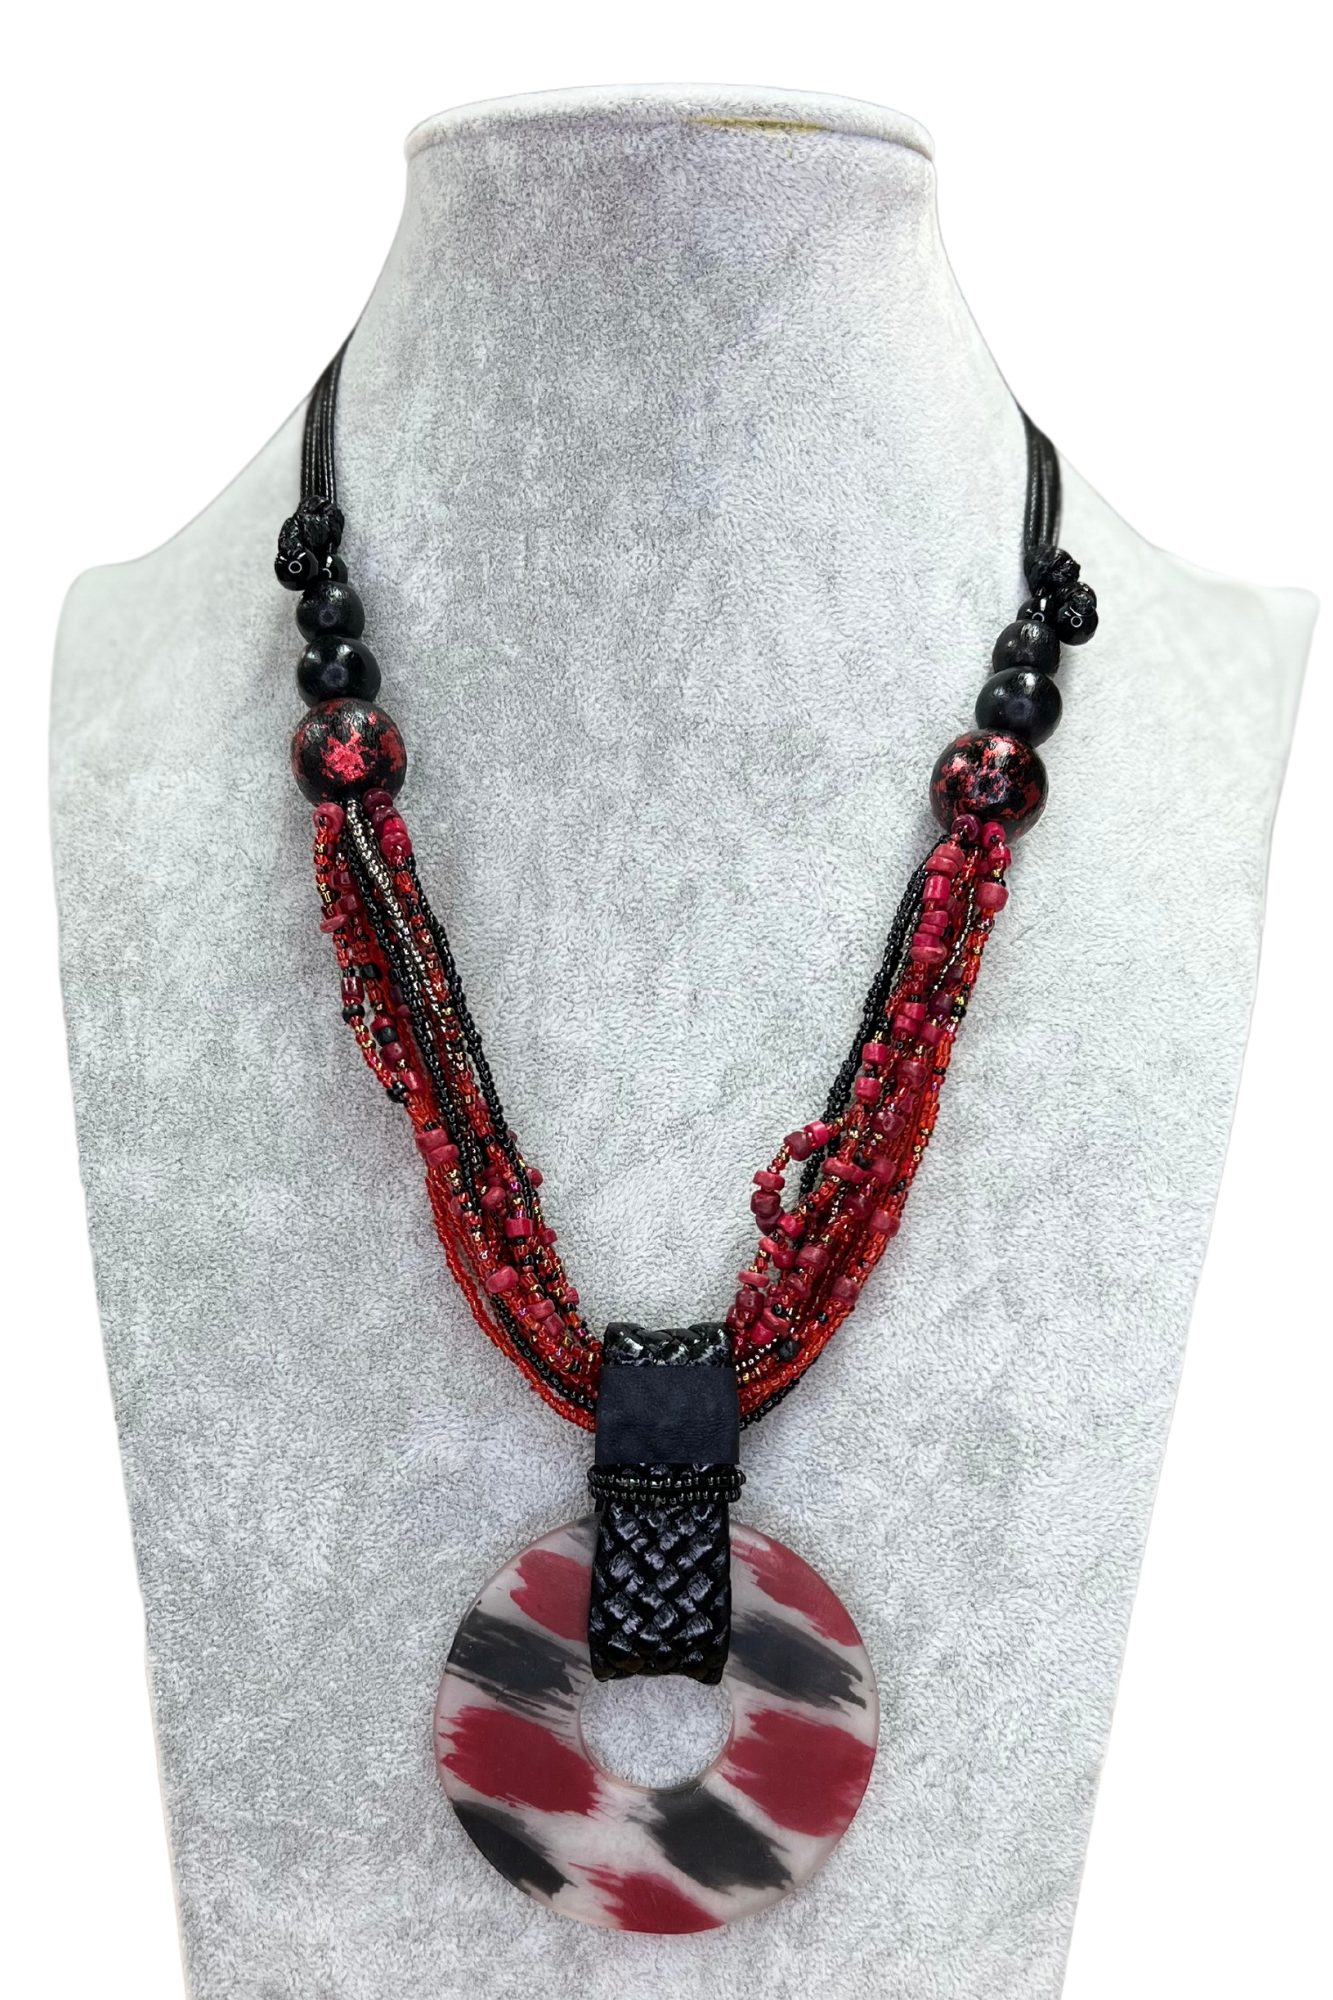 Black & Wine Pendant With Coconut Beads Necklace Alisha D